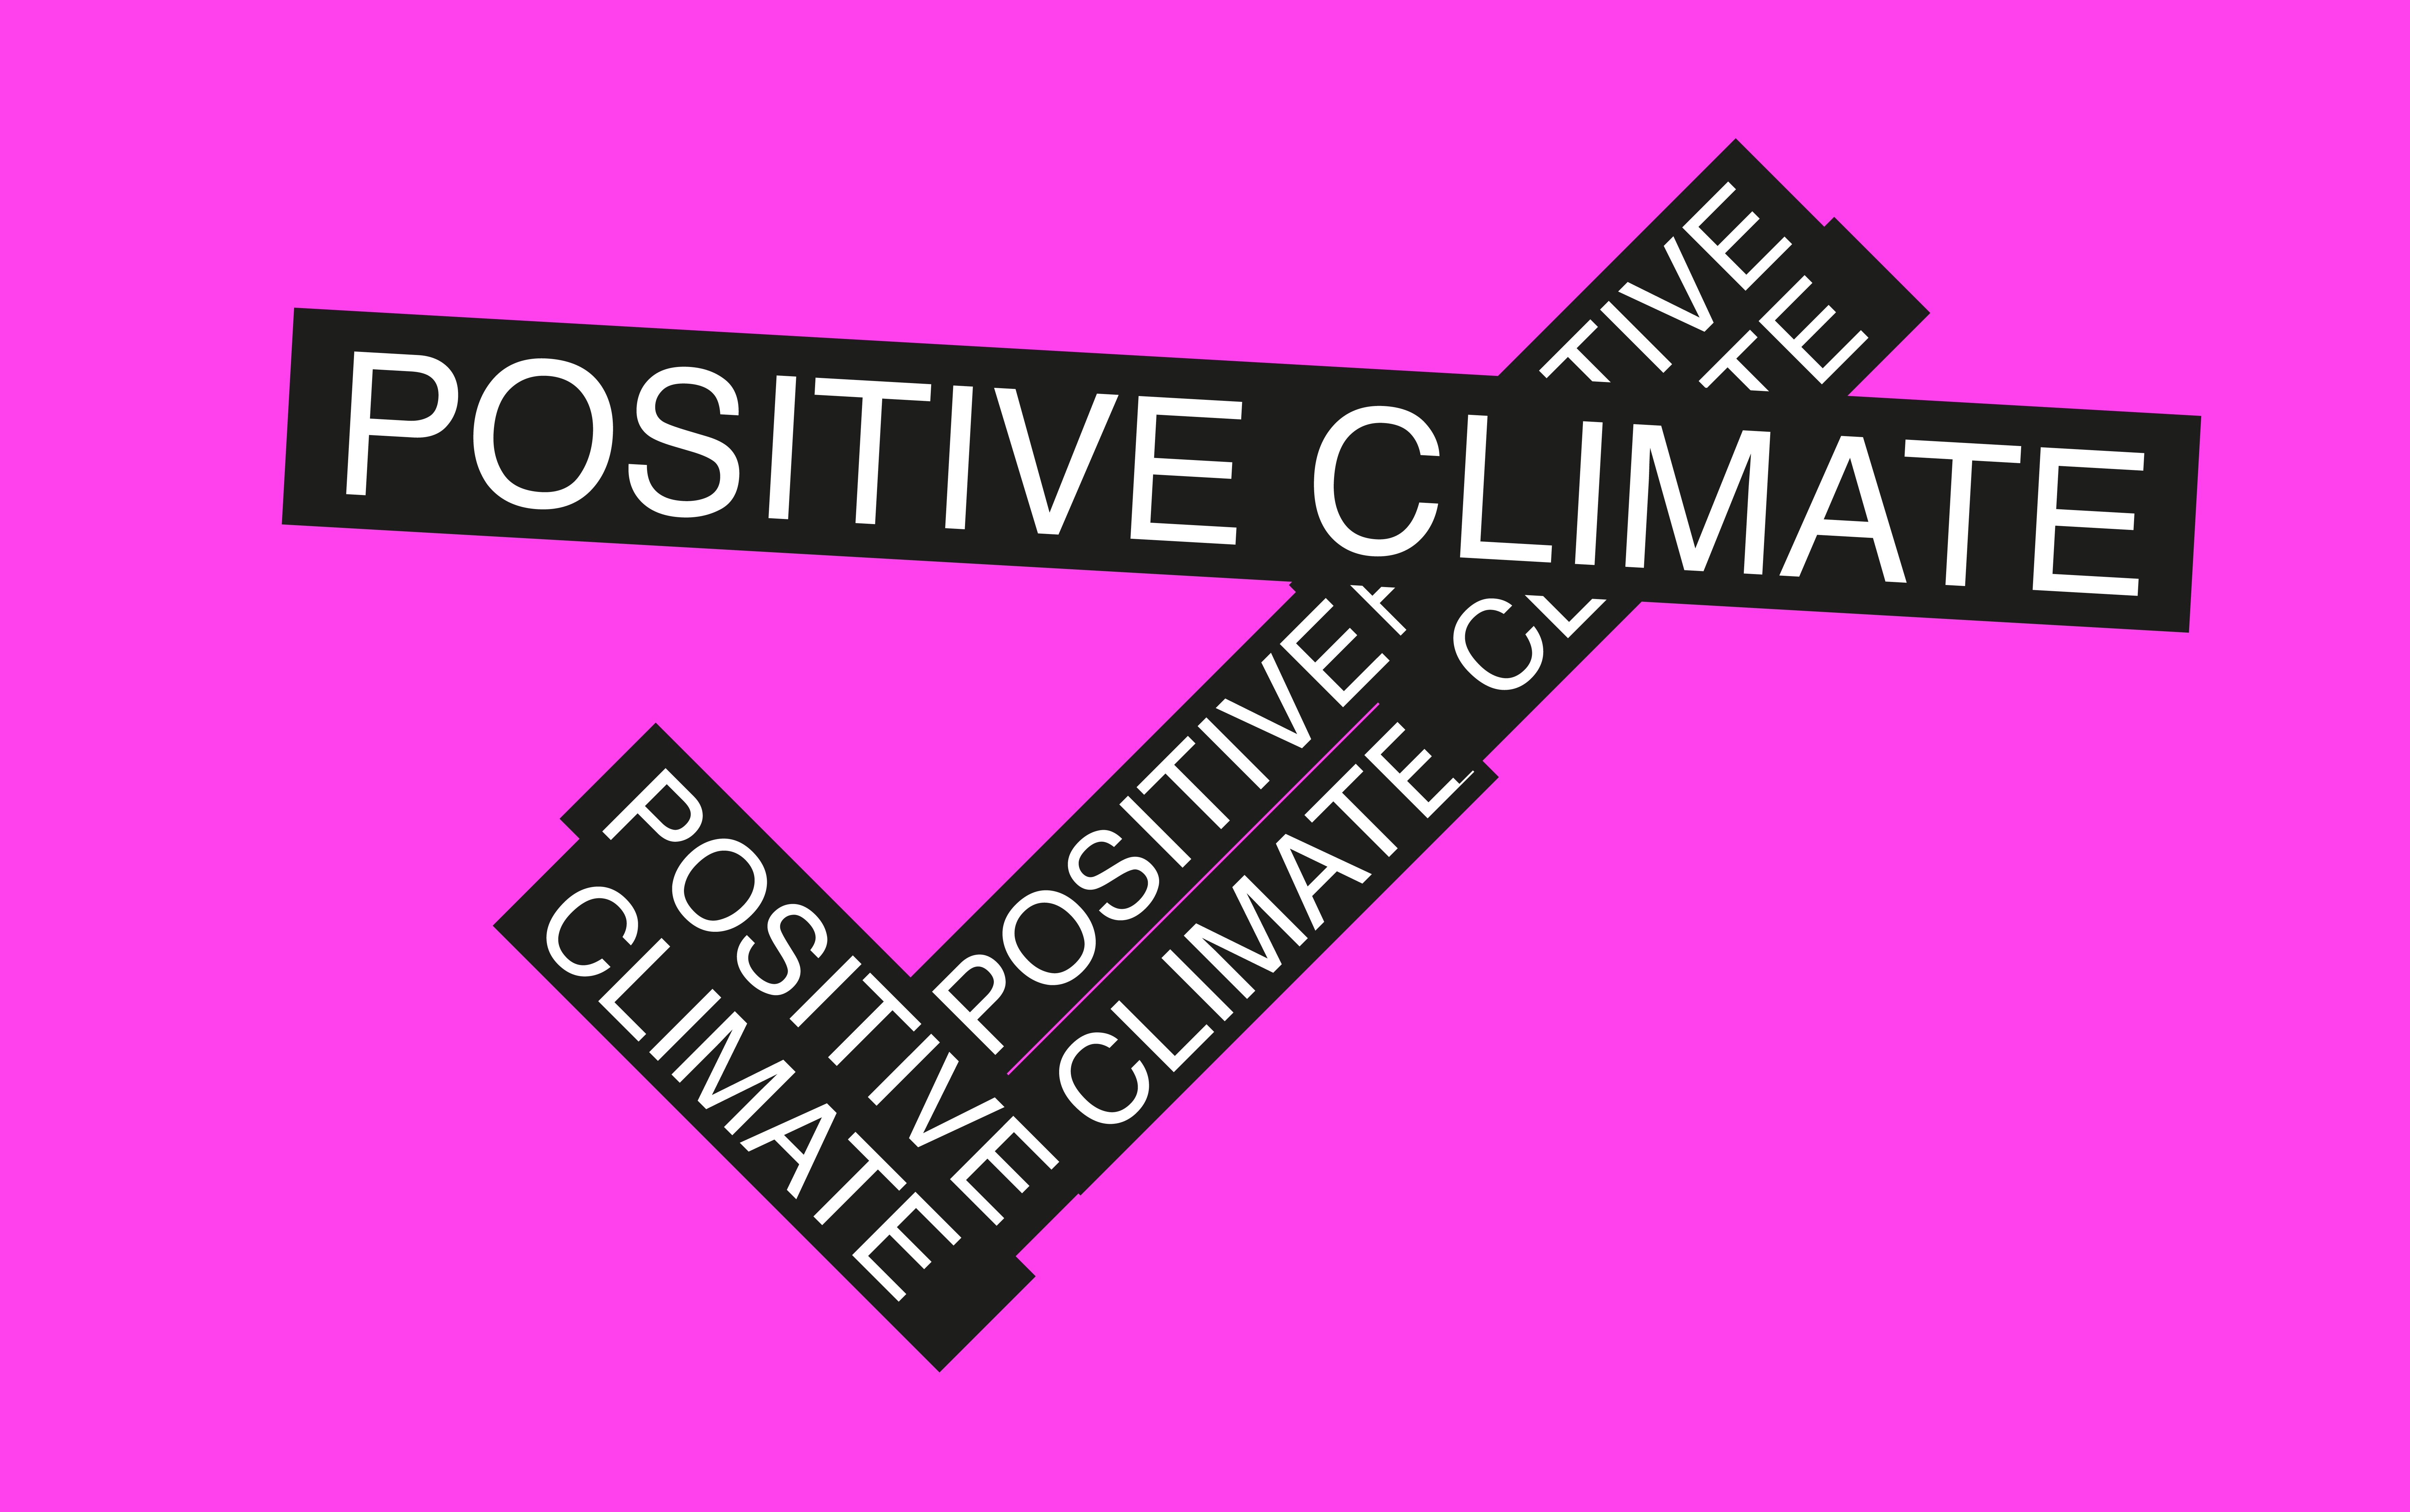 Positive Climate logo on pink background